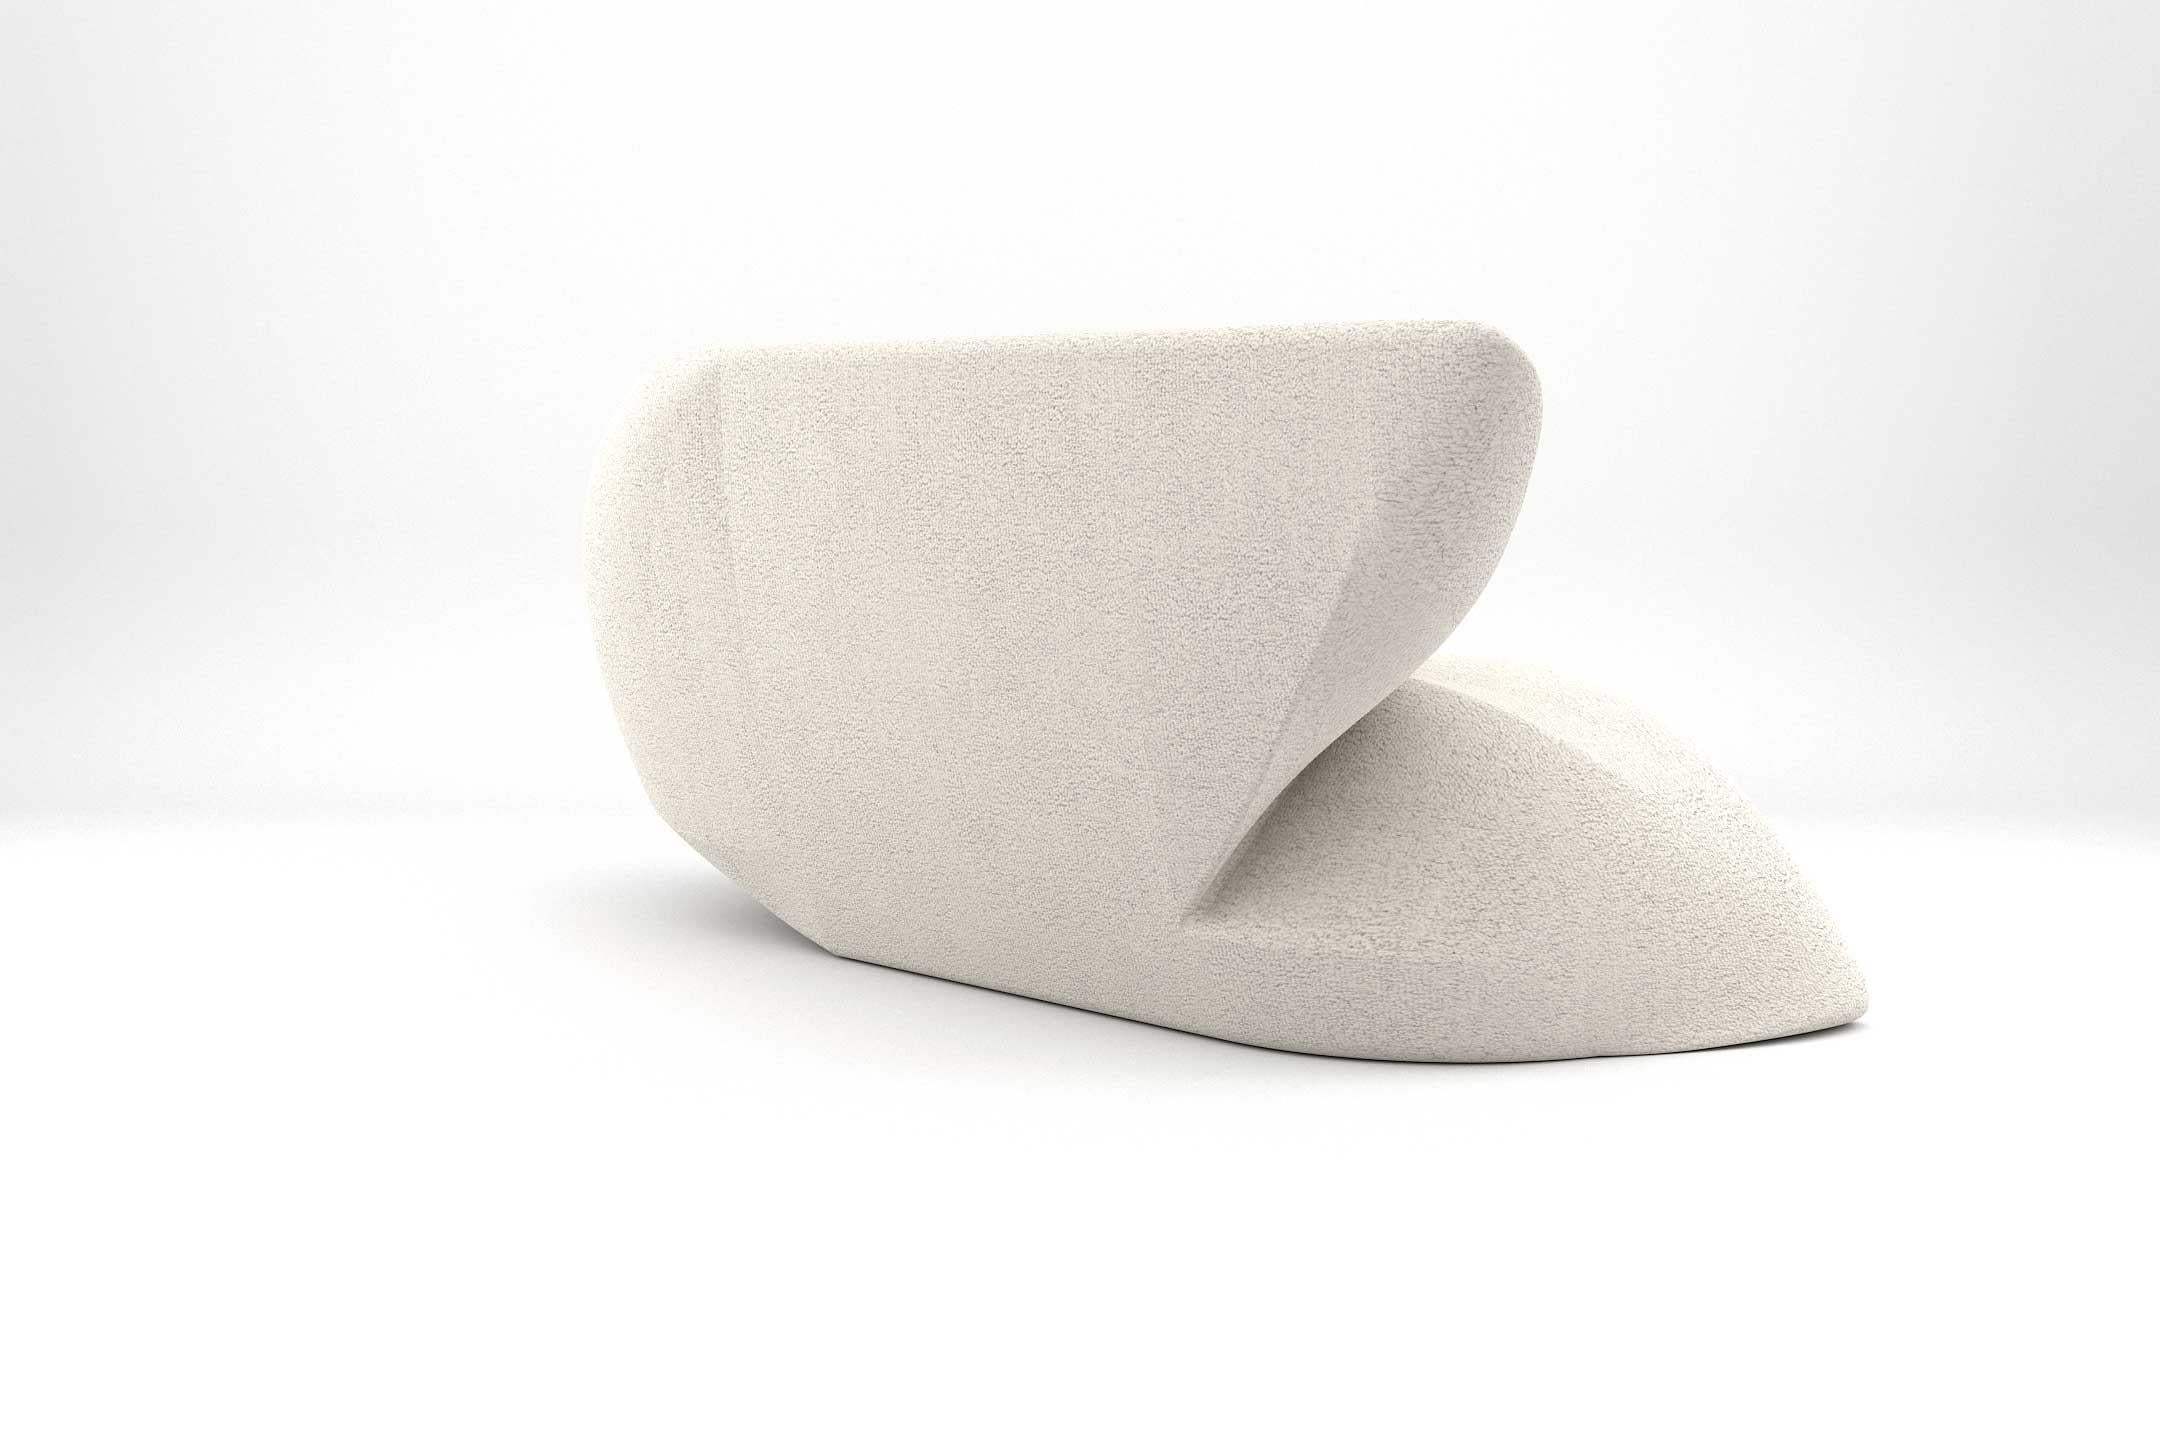 European Delta Sofa - Modern White Upholstered Two Seat Sofa For Sale